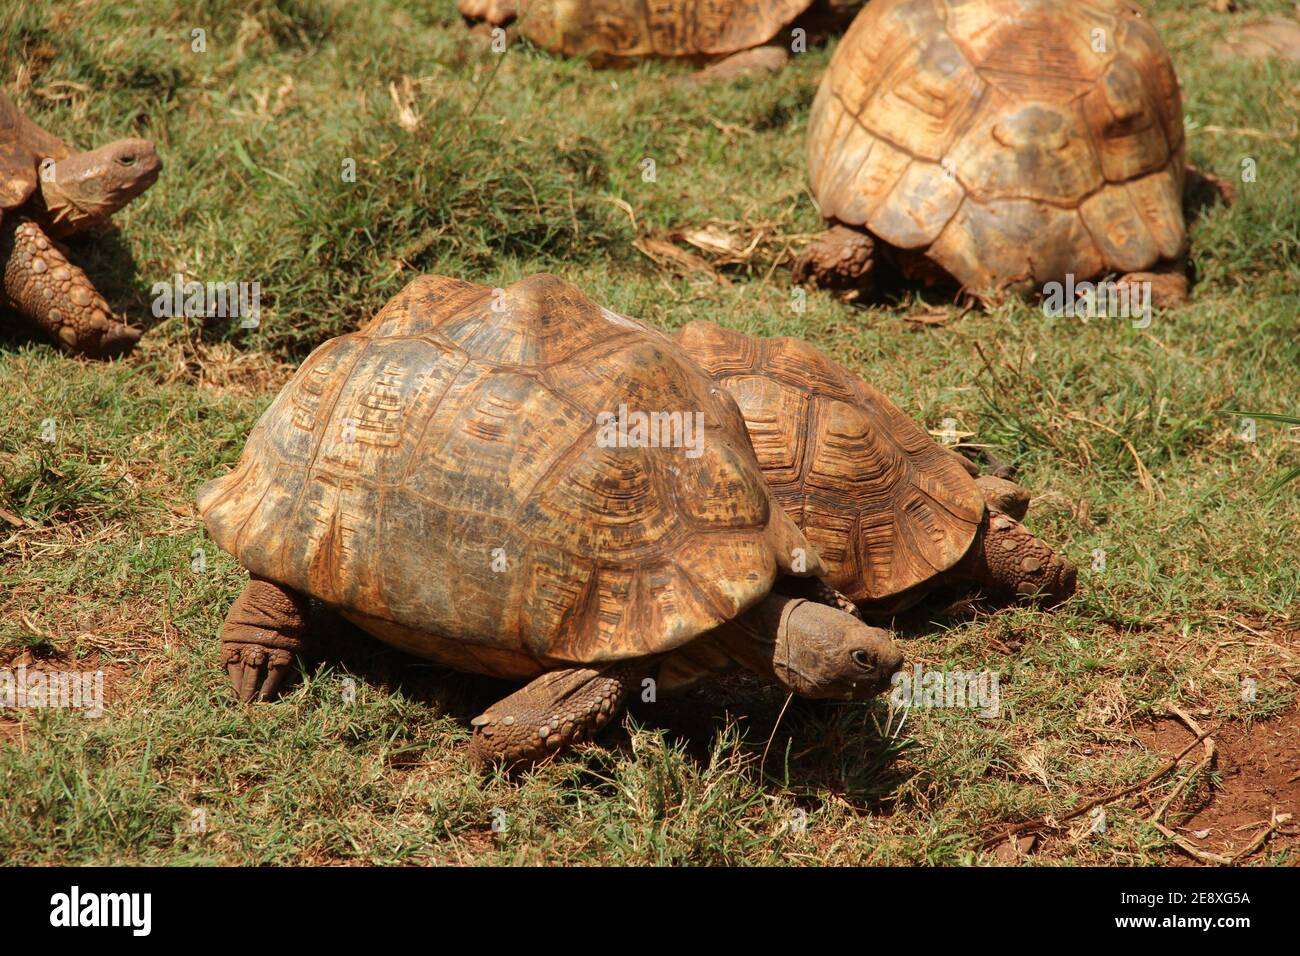 Tortoises at the Nairobi National Museum in Kenya Stock Photo